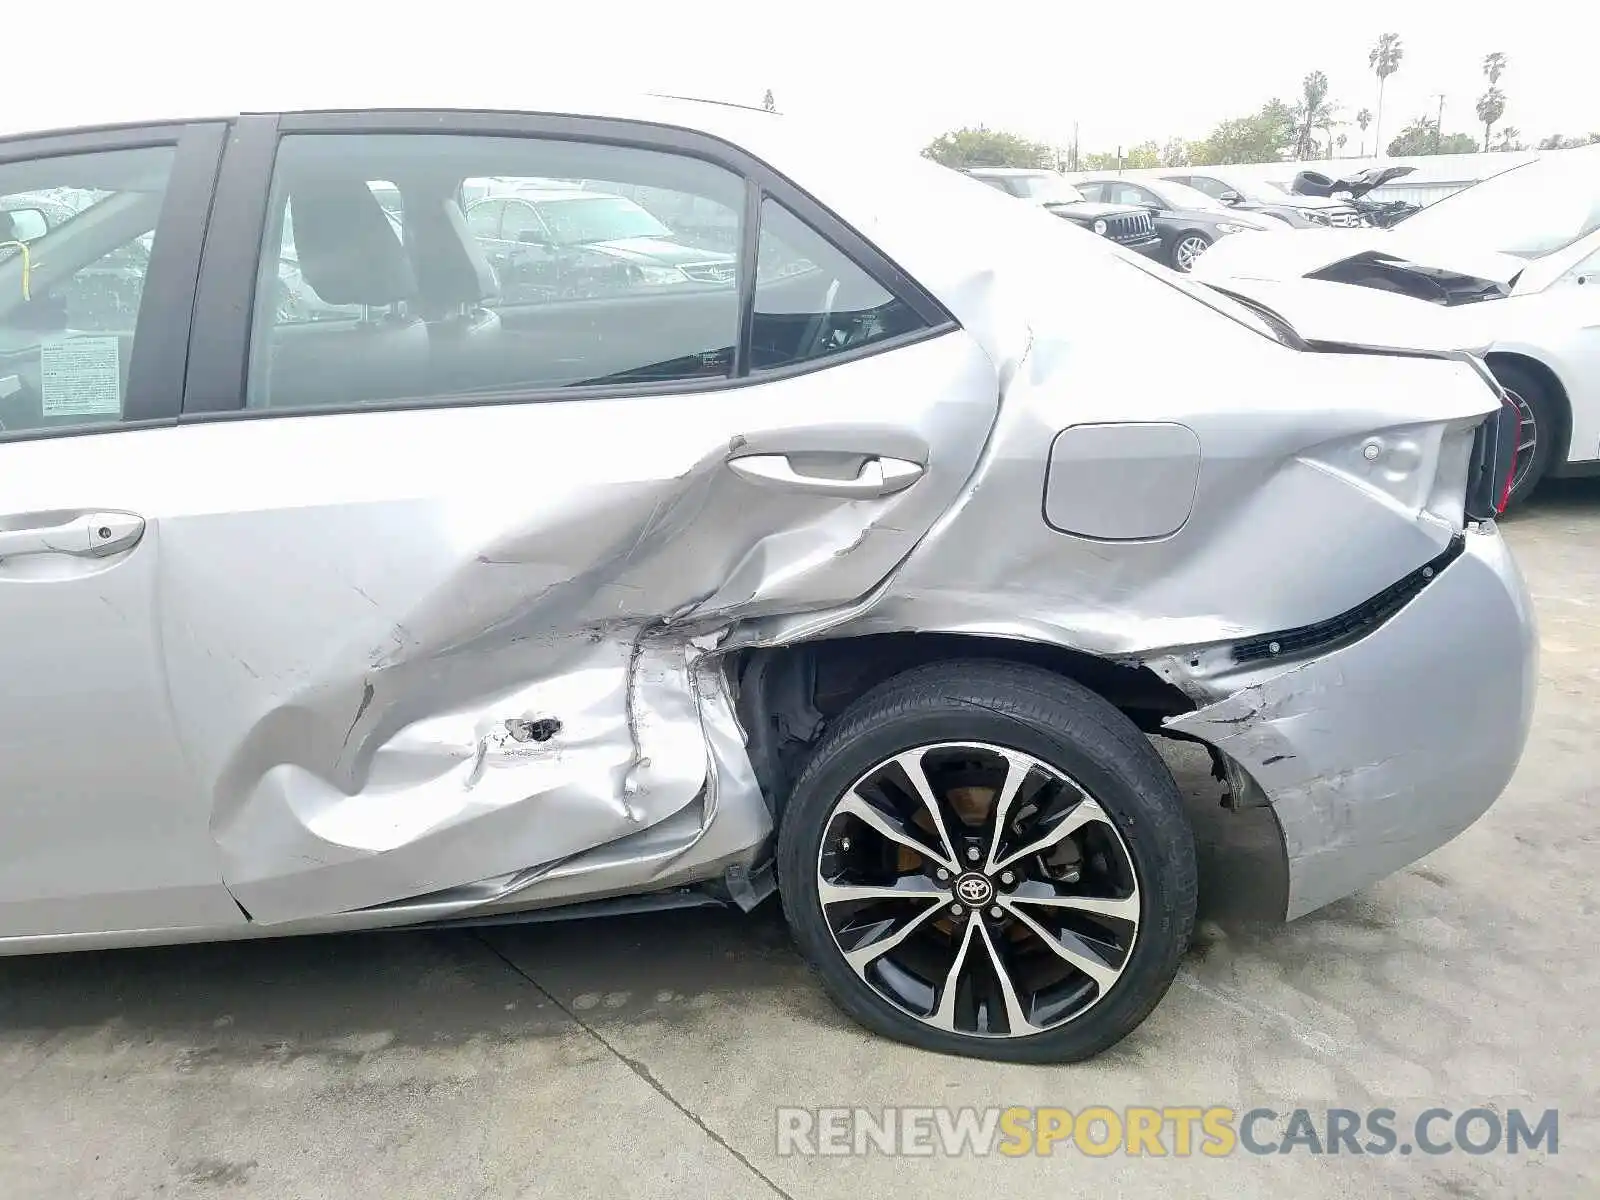 10 Photograph of a damaged car 5YFBURHEXKP859087 TOYOTA COROLLA 2019